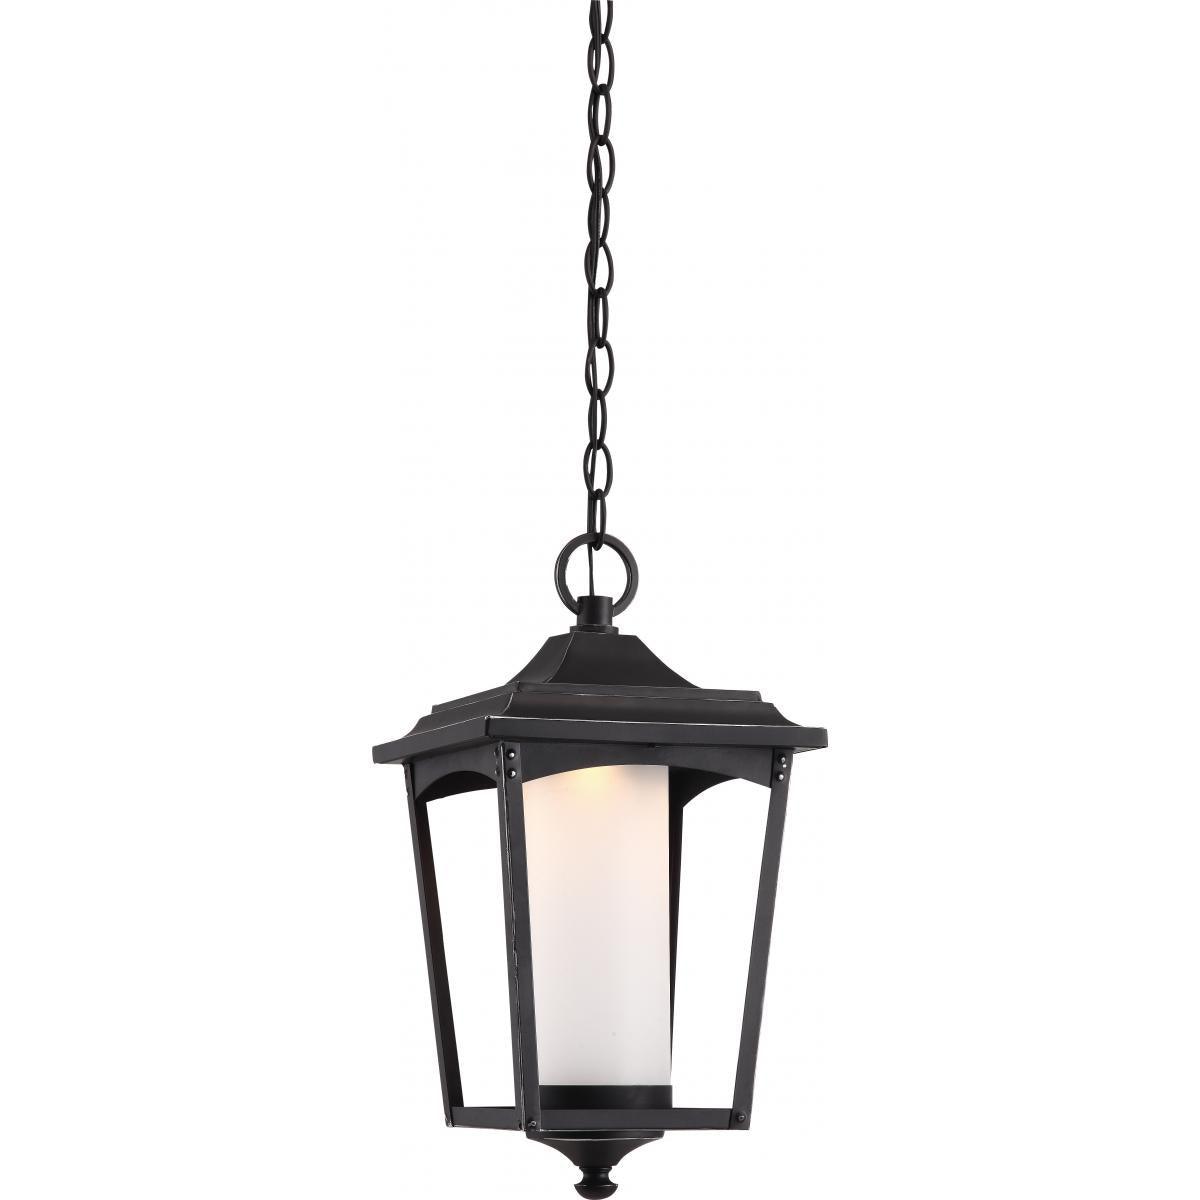 Essex 18 In. LED Outdoor Hanging Lantern Black finish